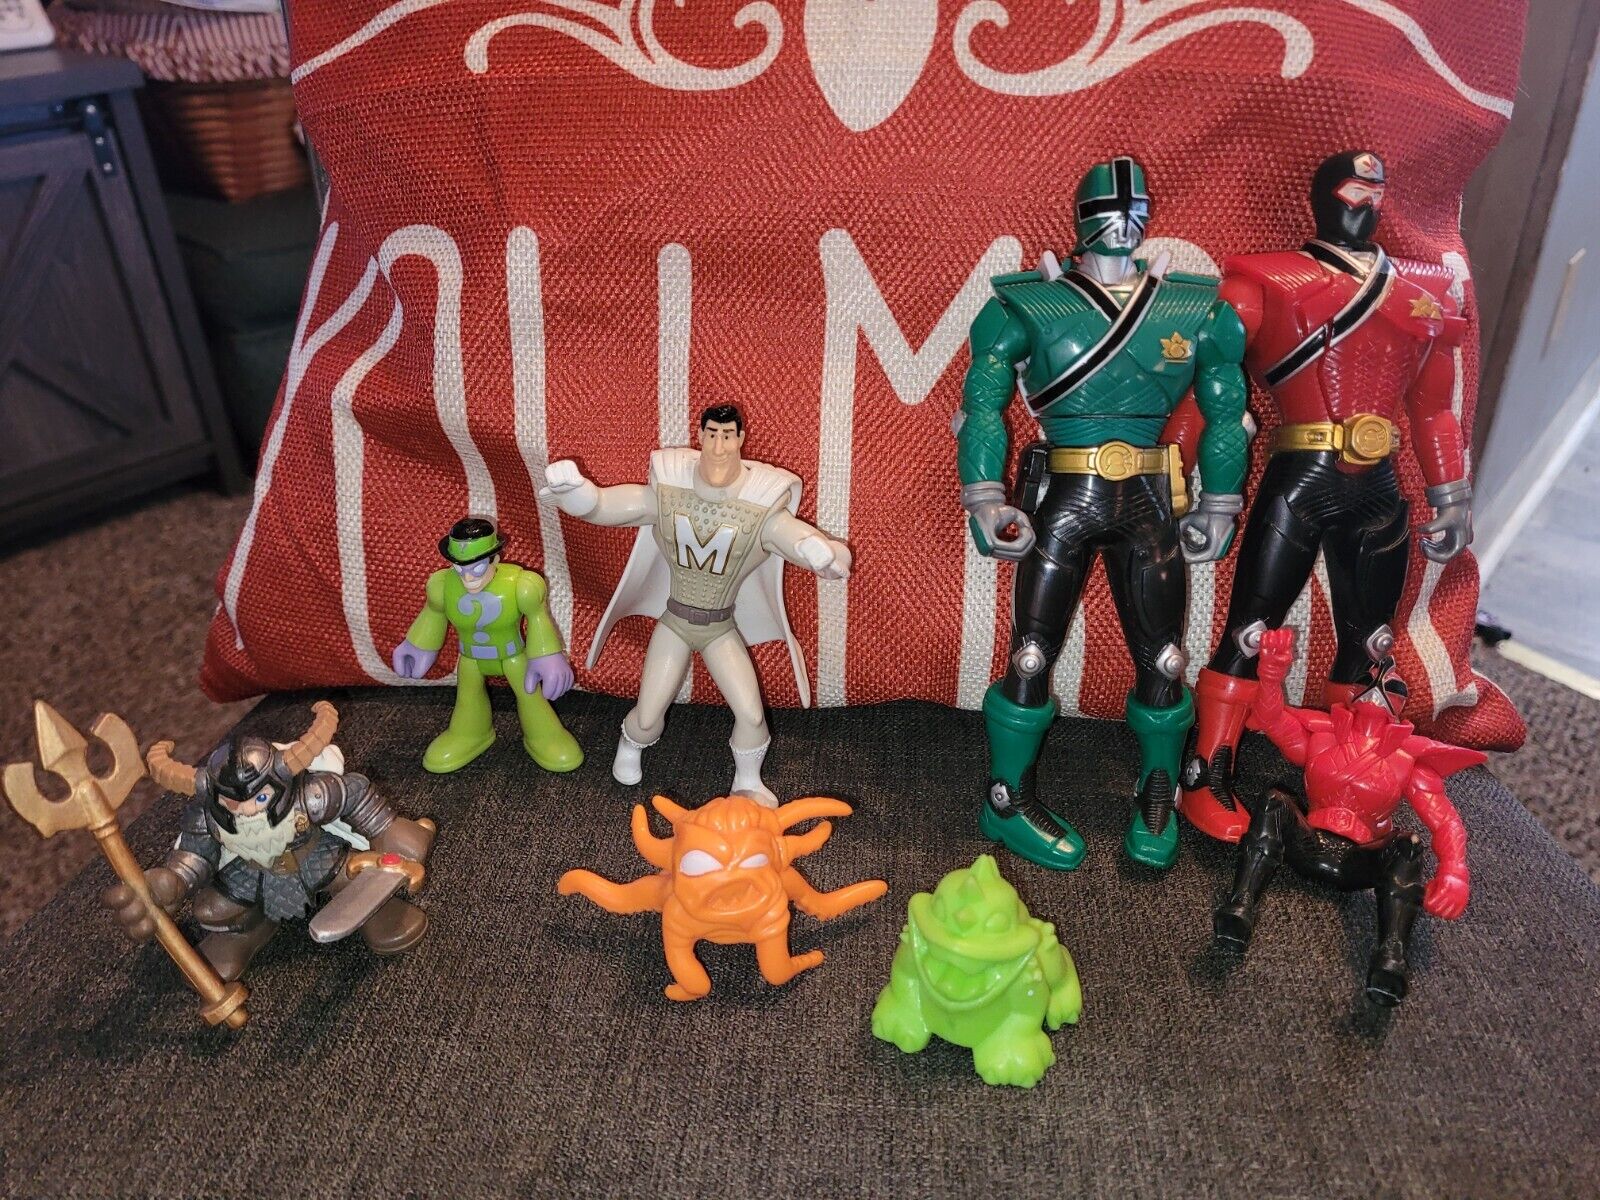 Boys Action Figure Toys Lot ODIN from Avengers Power Rangers Flip Head Alien Toy